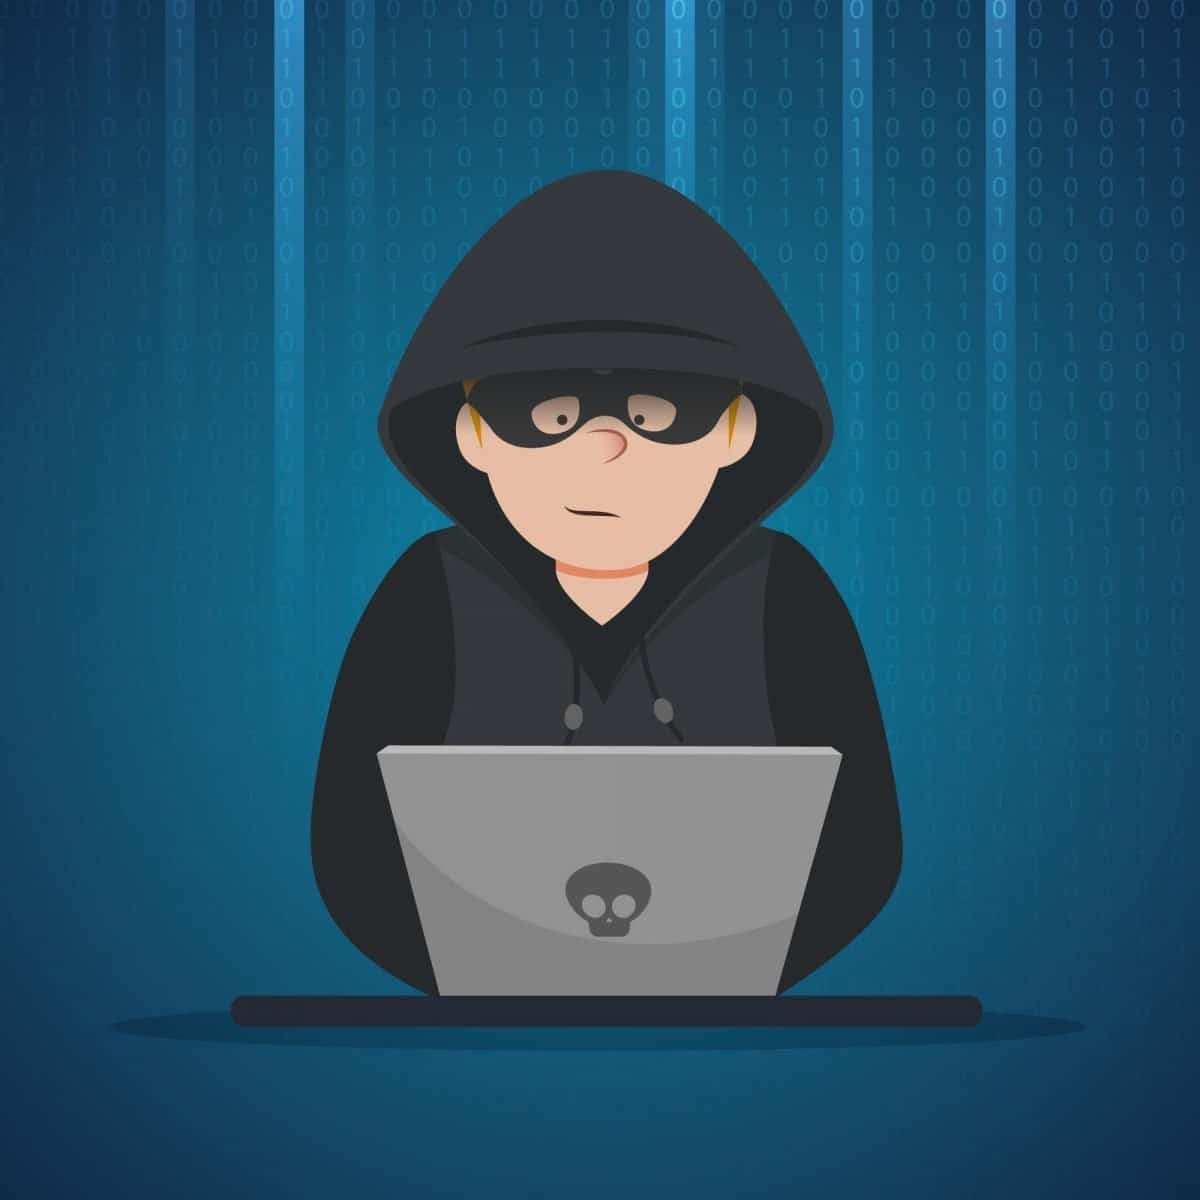 An illustration of a hacker using a laptop bored ape NFT